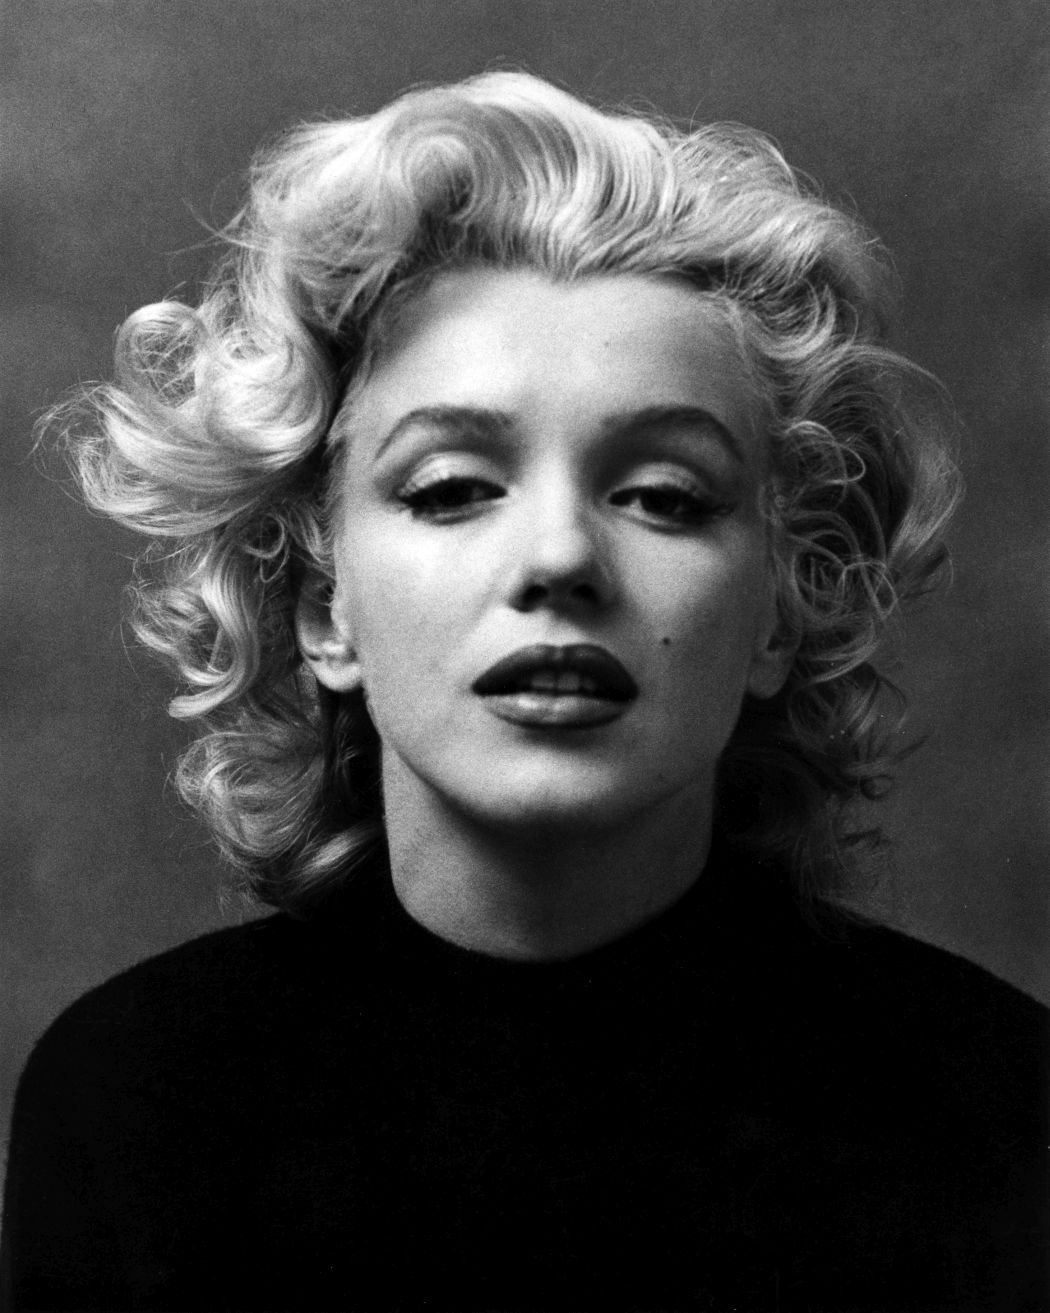 Ben Ross Marilyn Monroe, 1953 - 10-famous-photographers-and-10-black-and-white-photos-of-marilyn-monroe-Ben-Ross